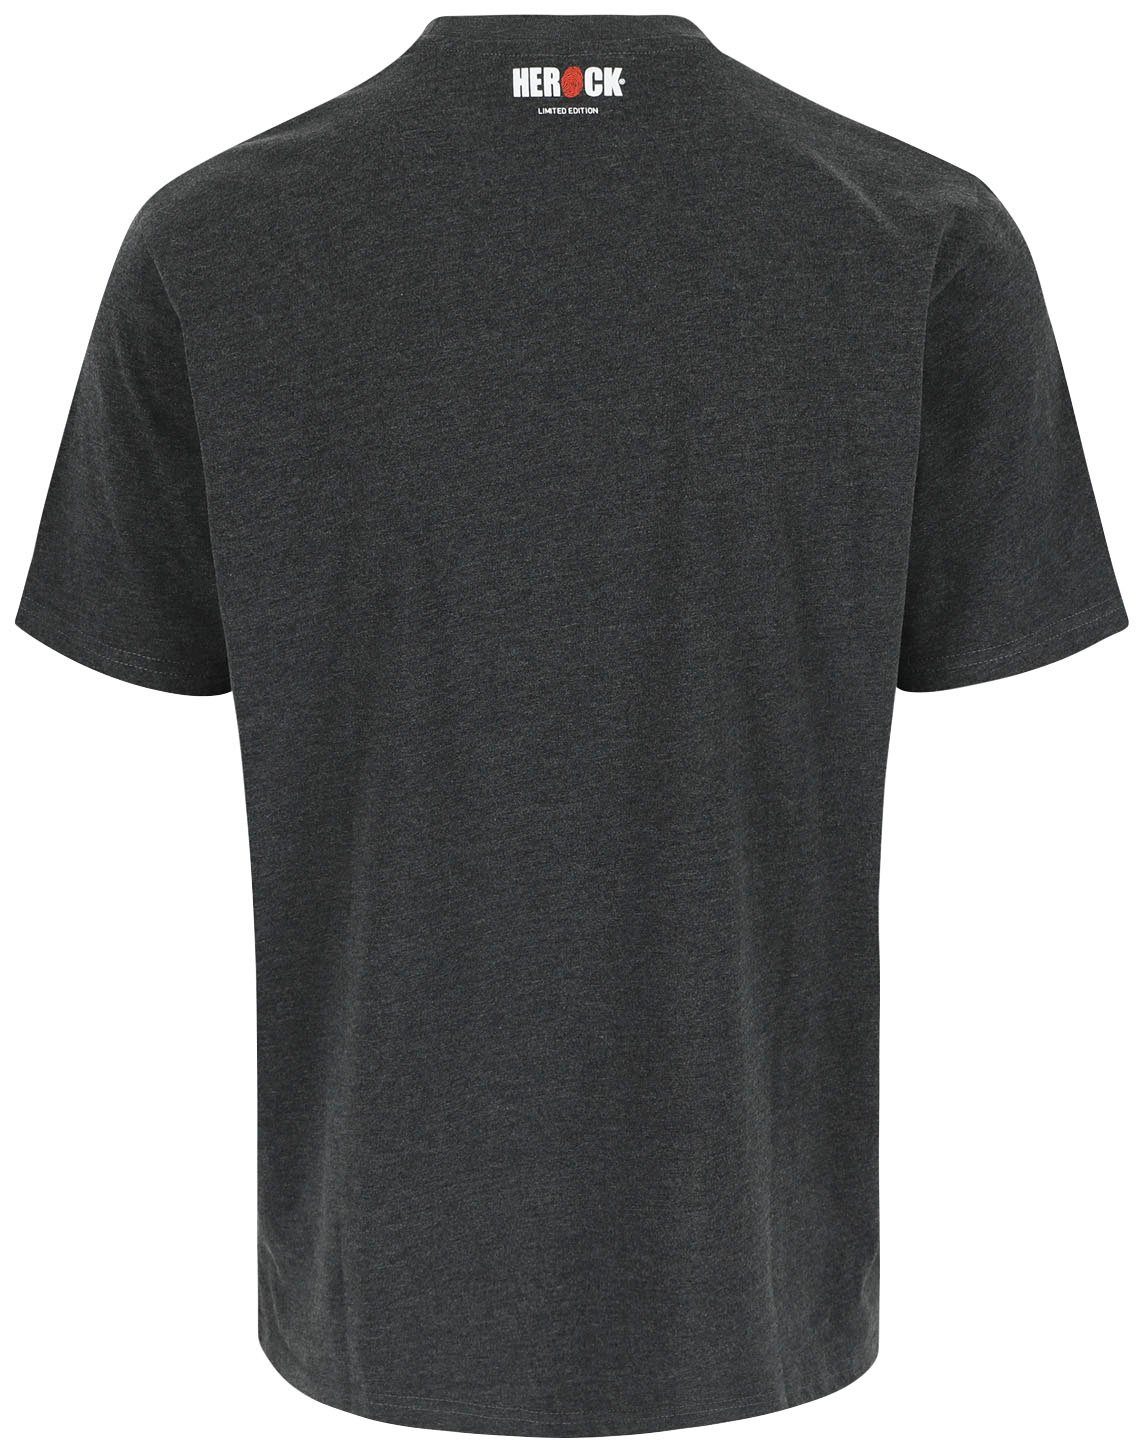 T-Shirt Maximus Edition Limited Herock